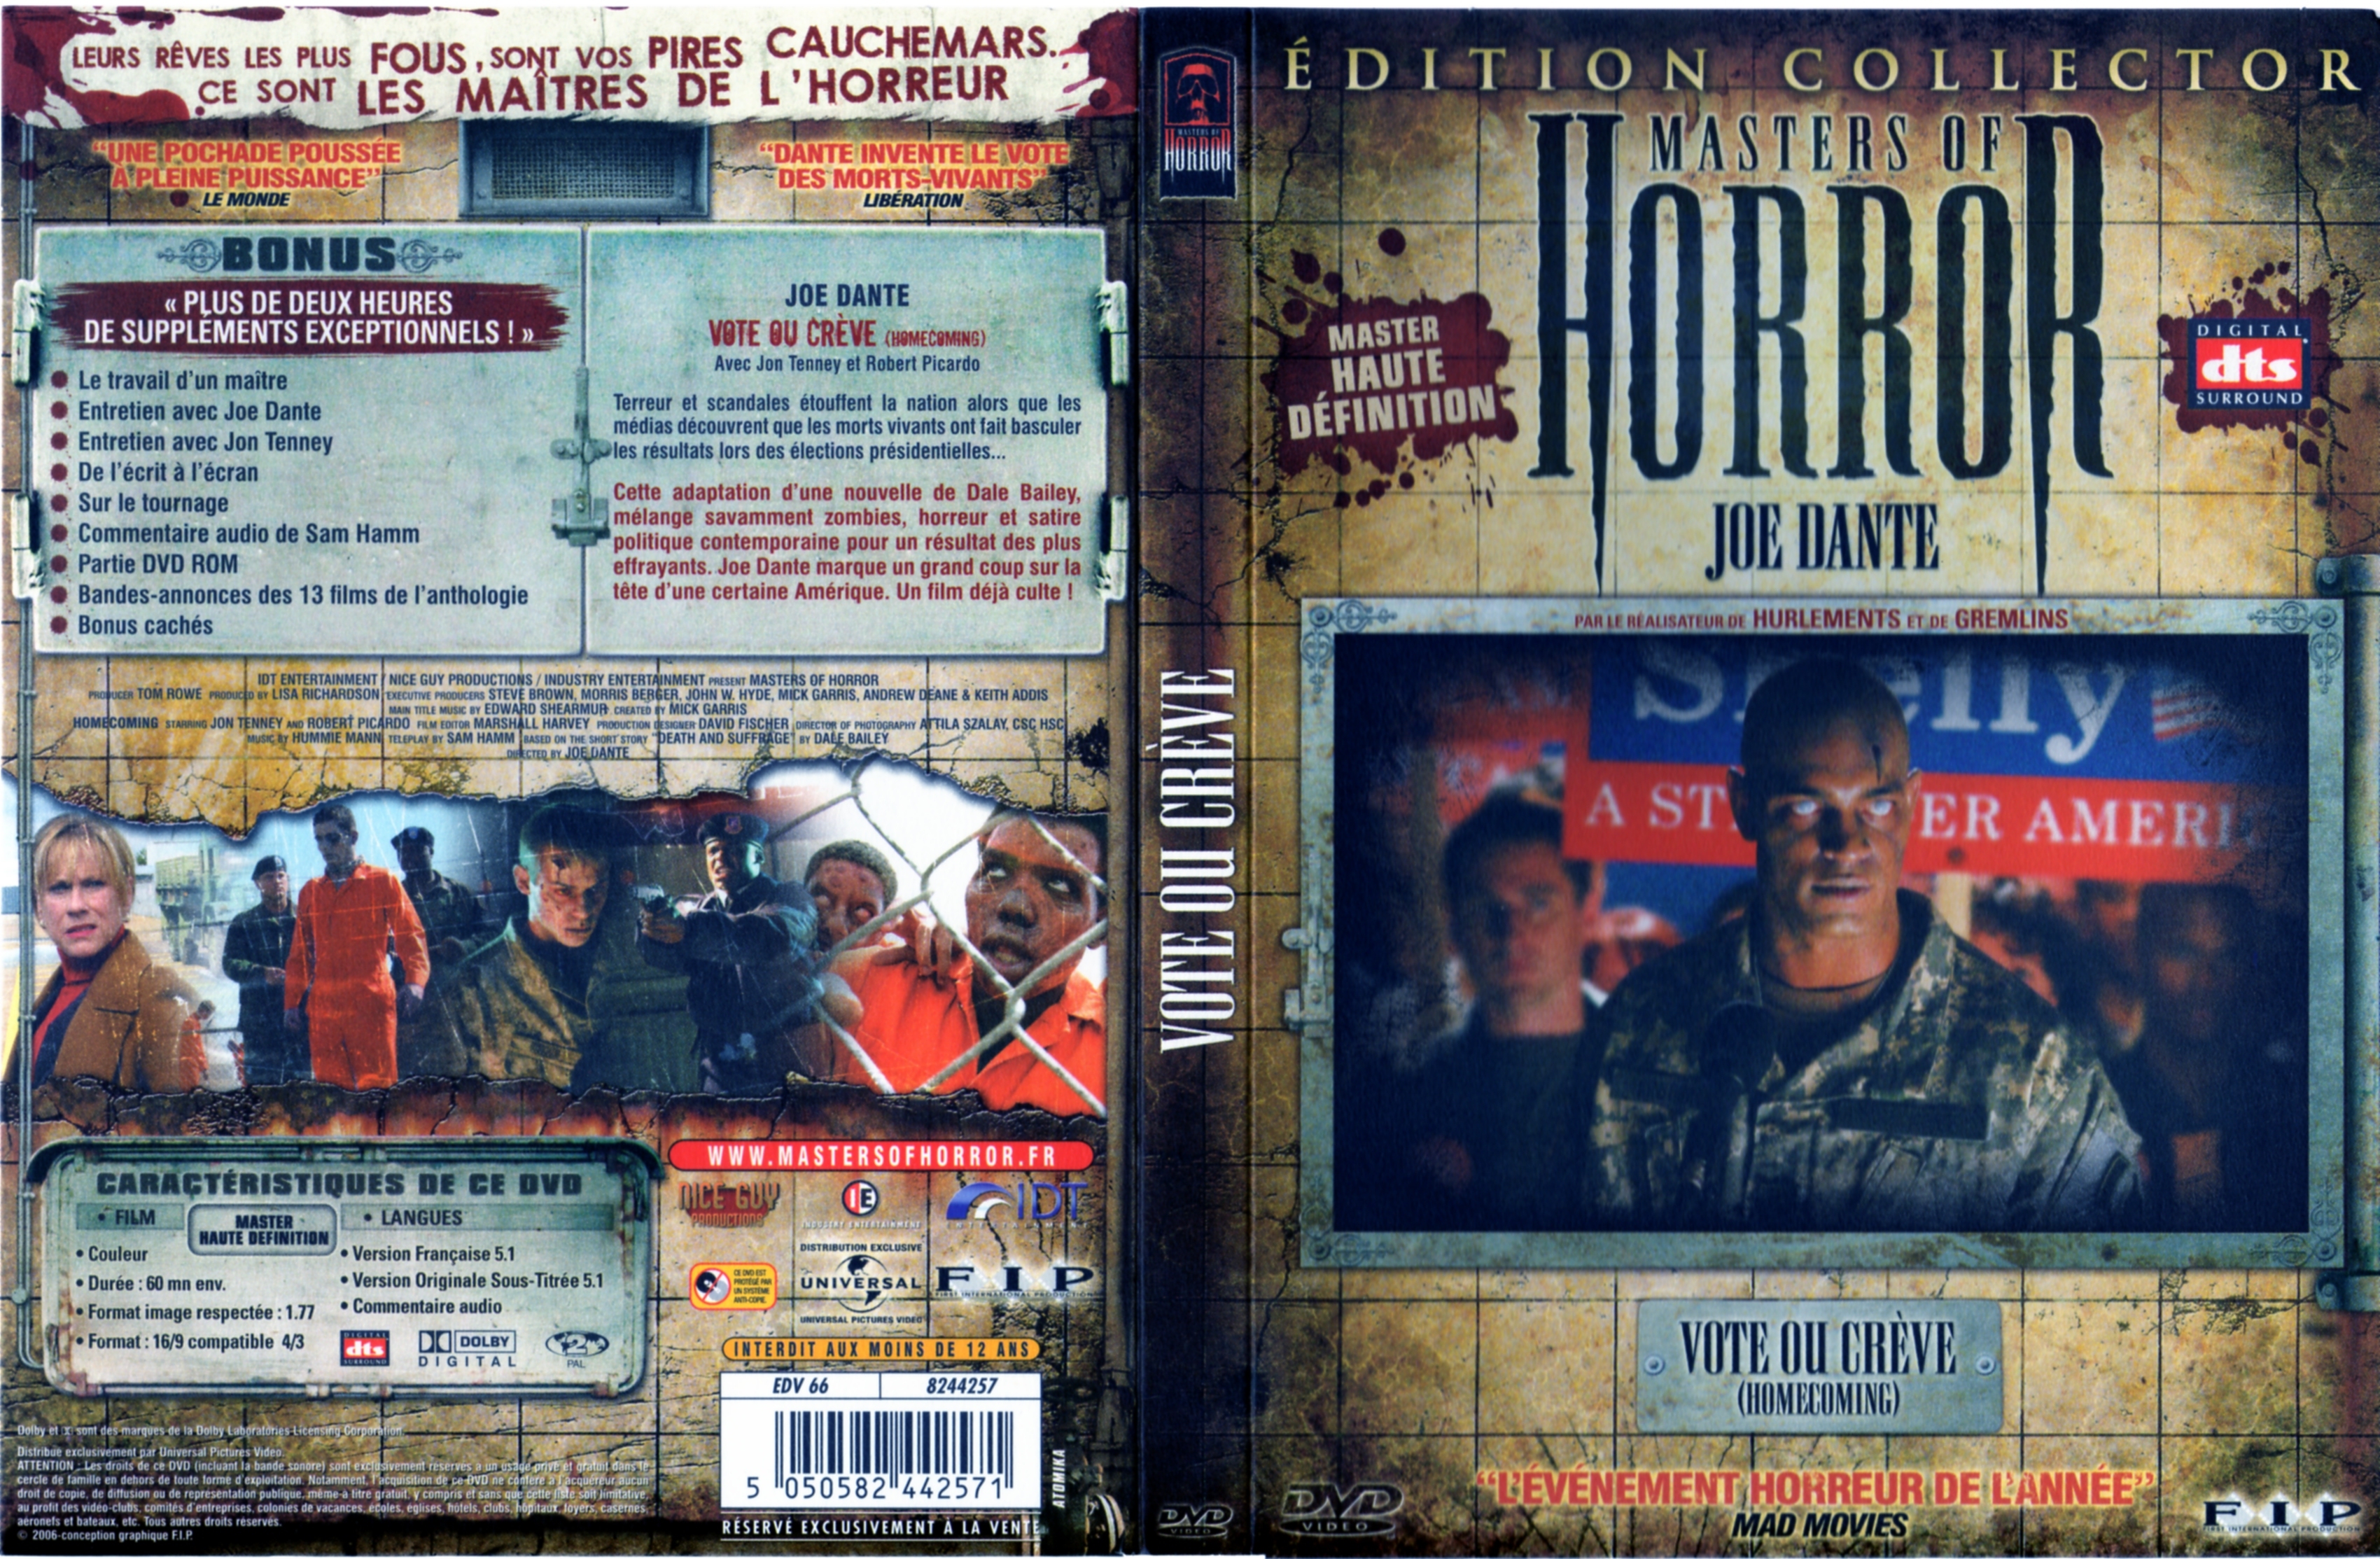 Jaquette DVD Masters of horror - Vote ou creve v2